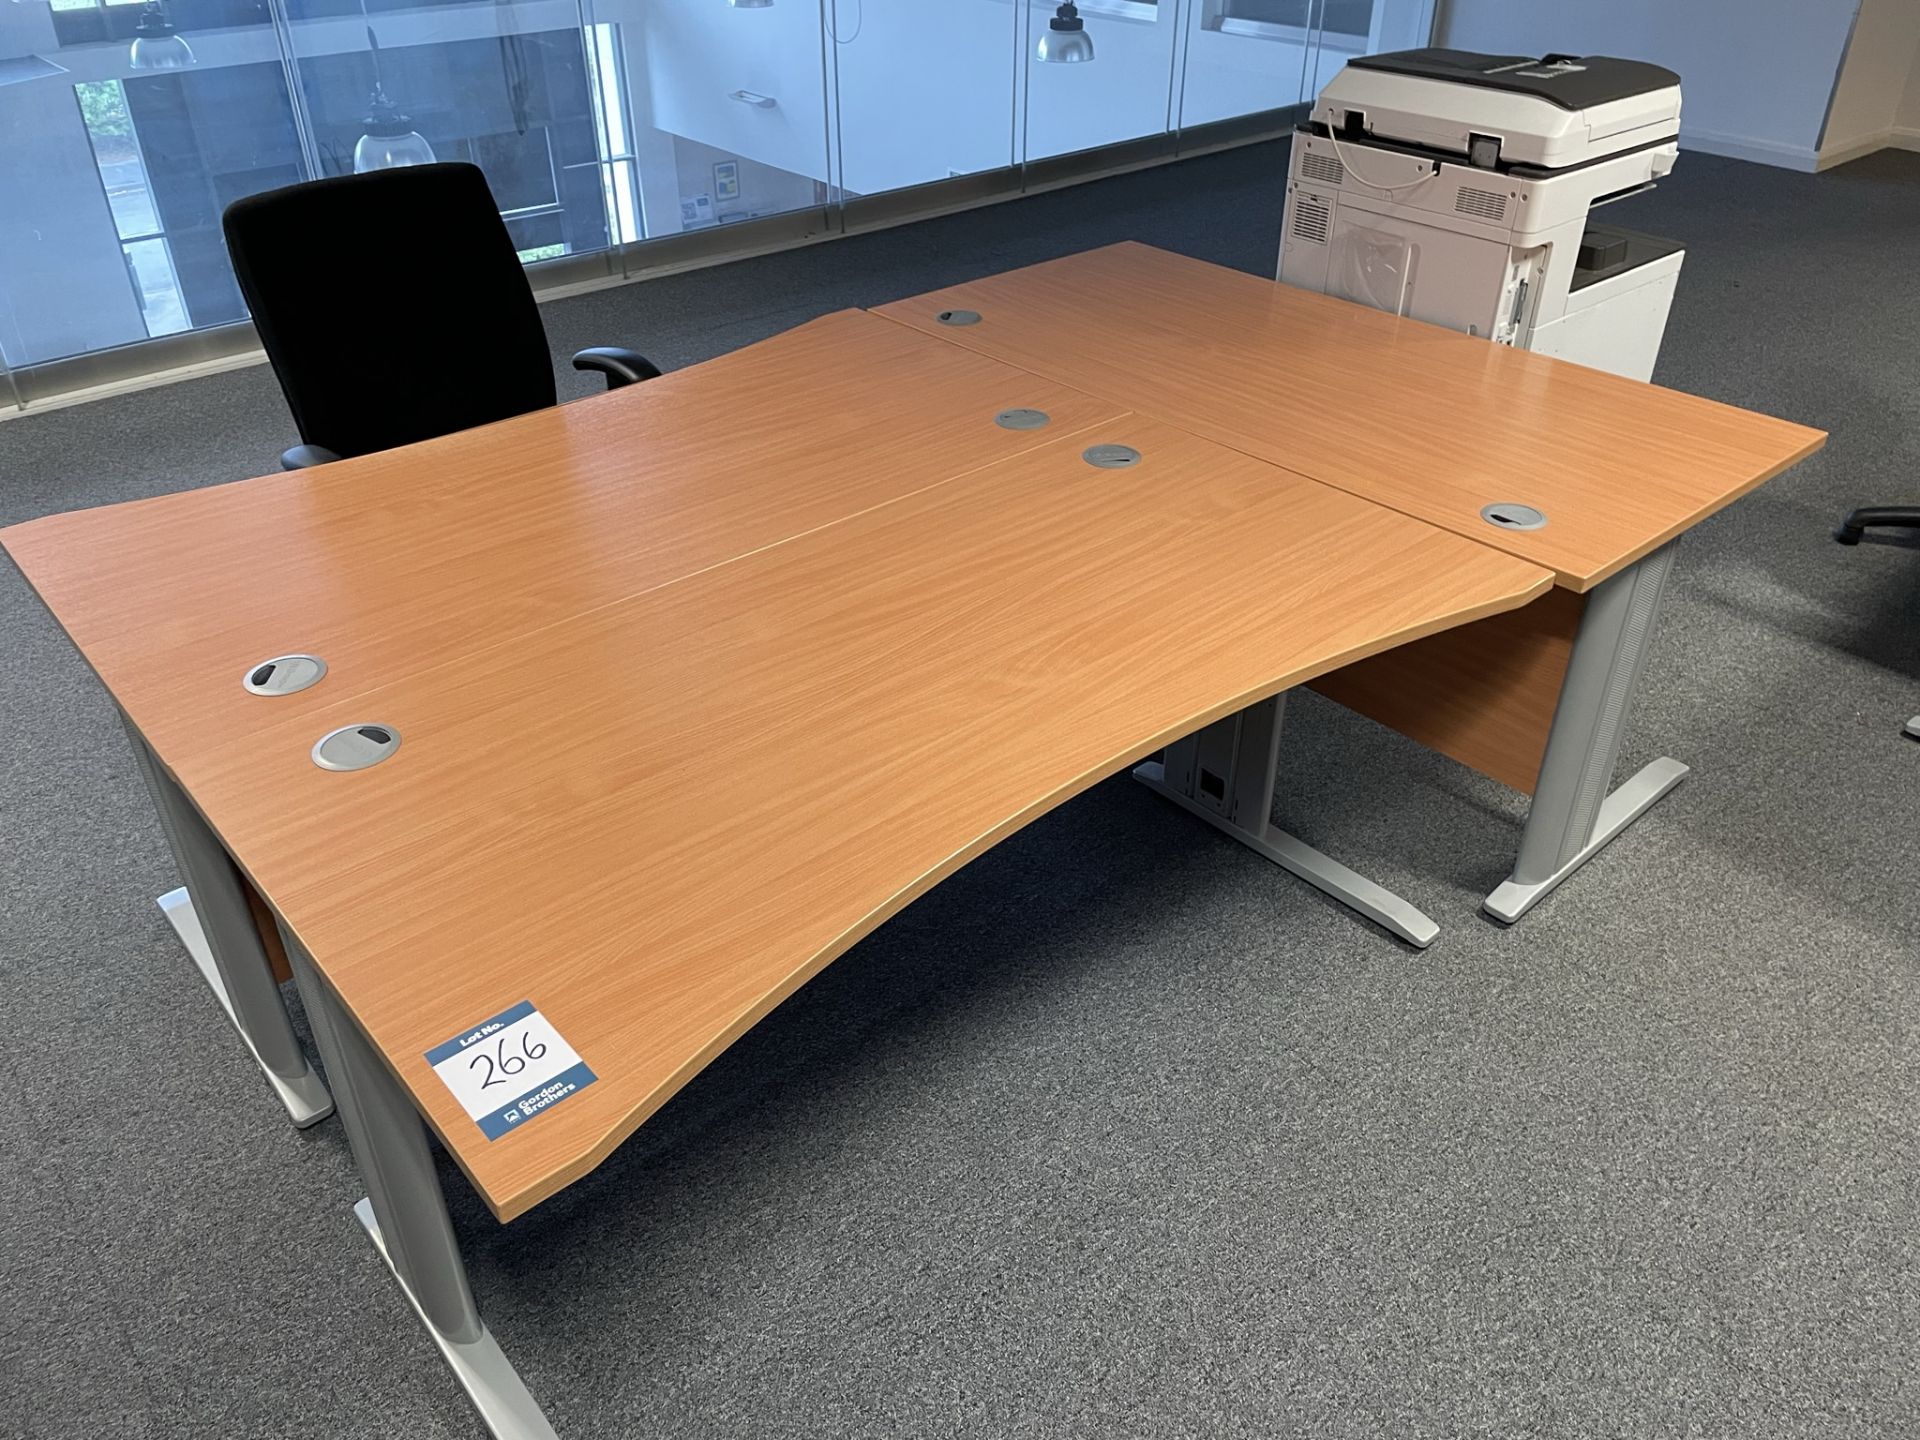 2x (no.) curved front desks, 3x (no.) rectangular desks and 3x (no.) operators chairs